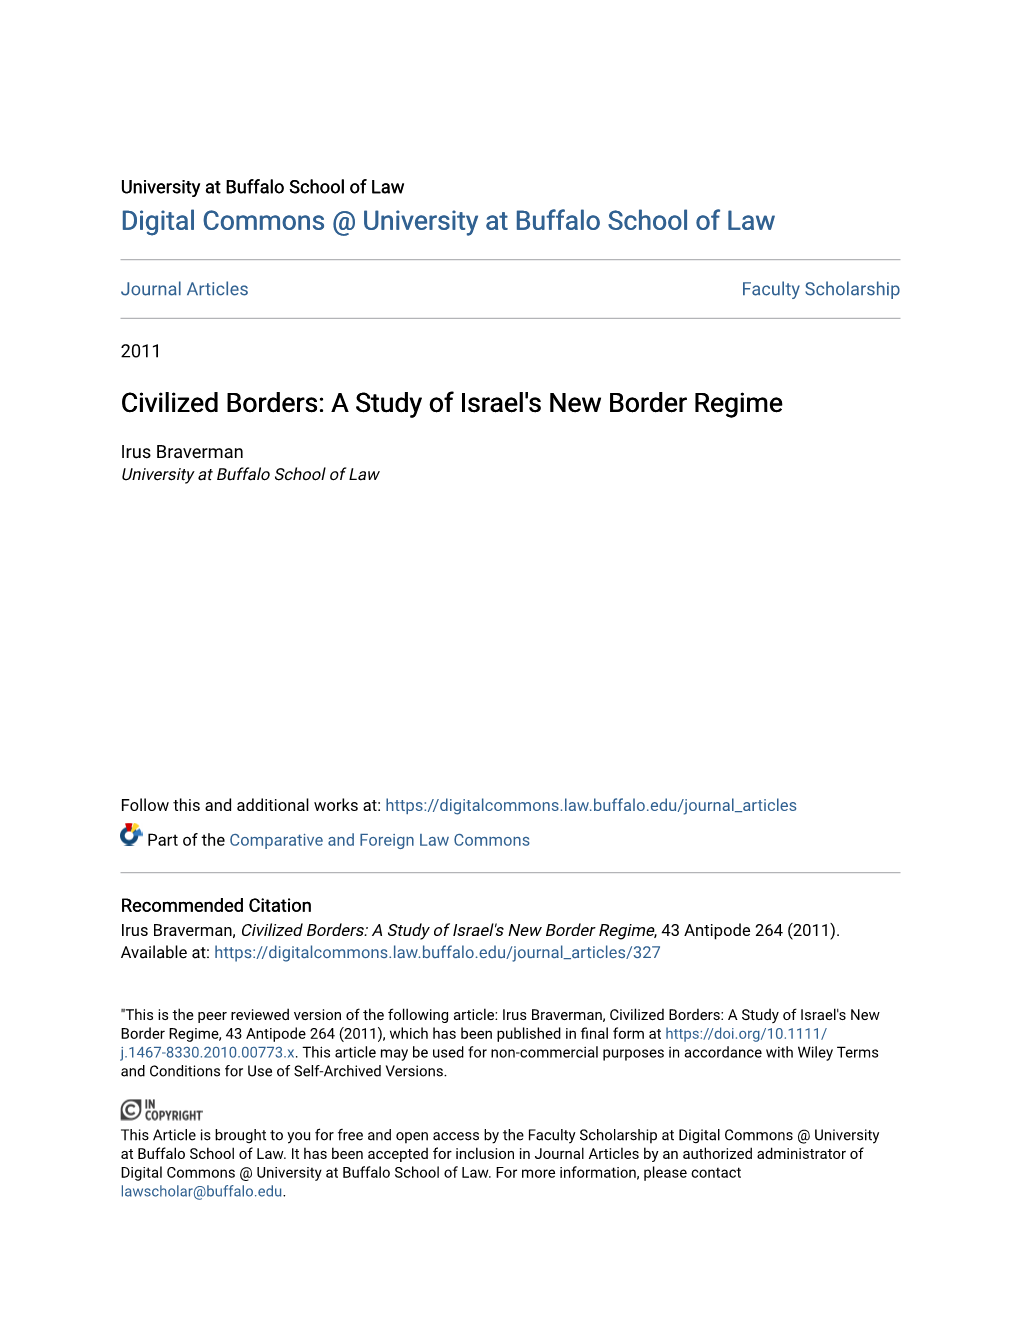 A Study of Israel's New Border Regime